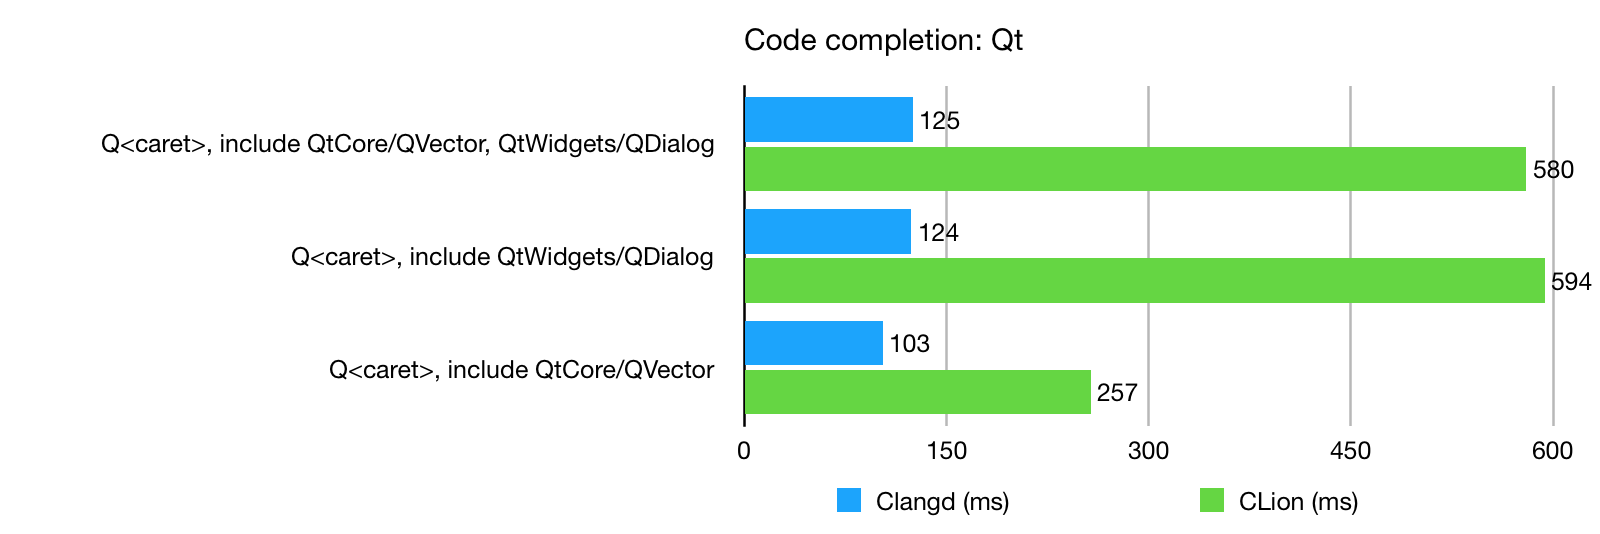 Code completion: Qt